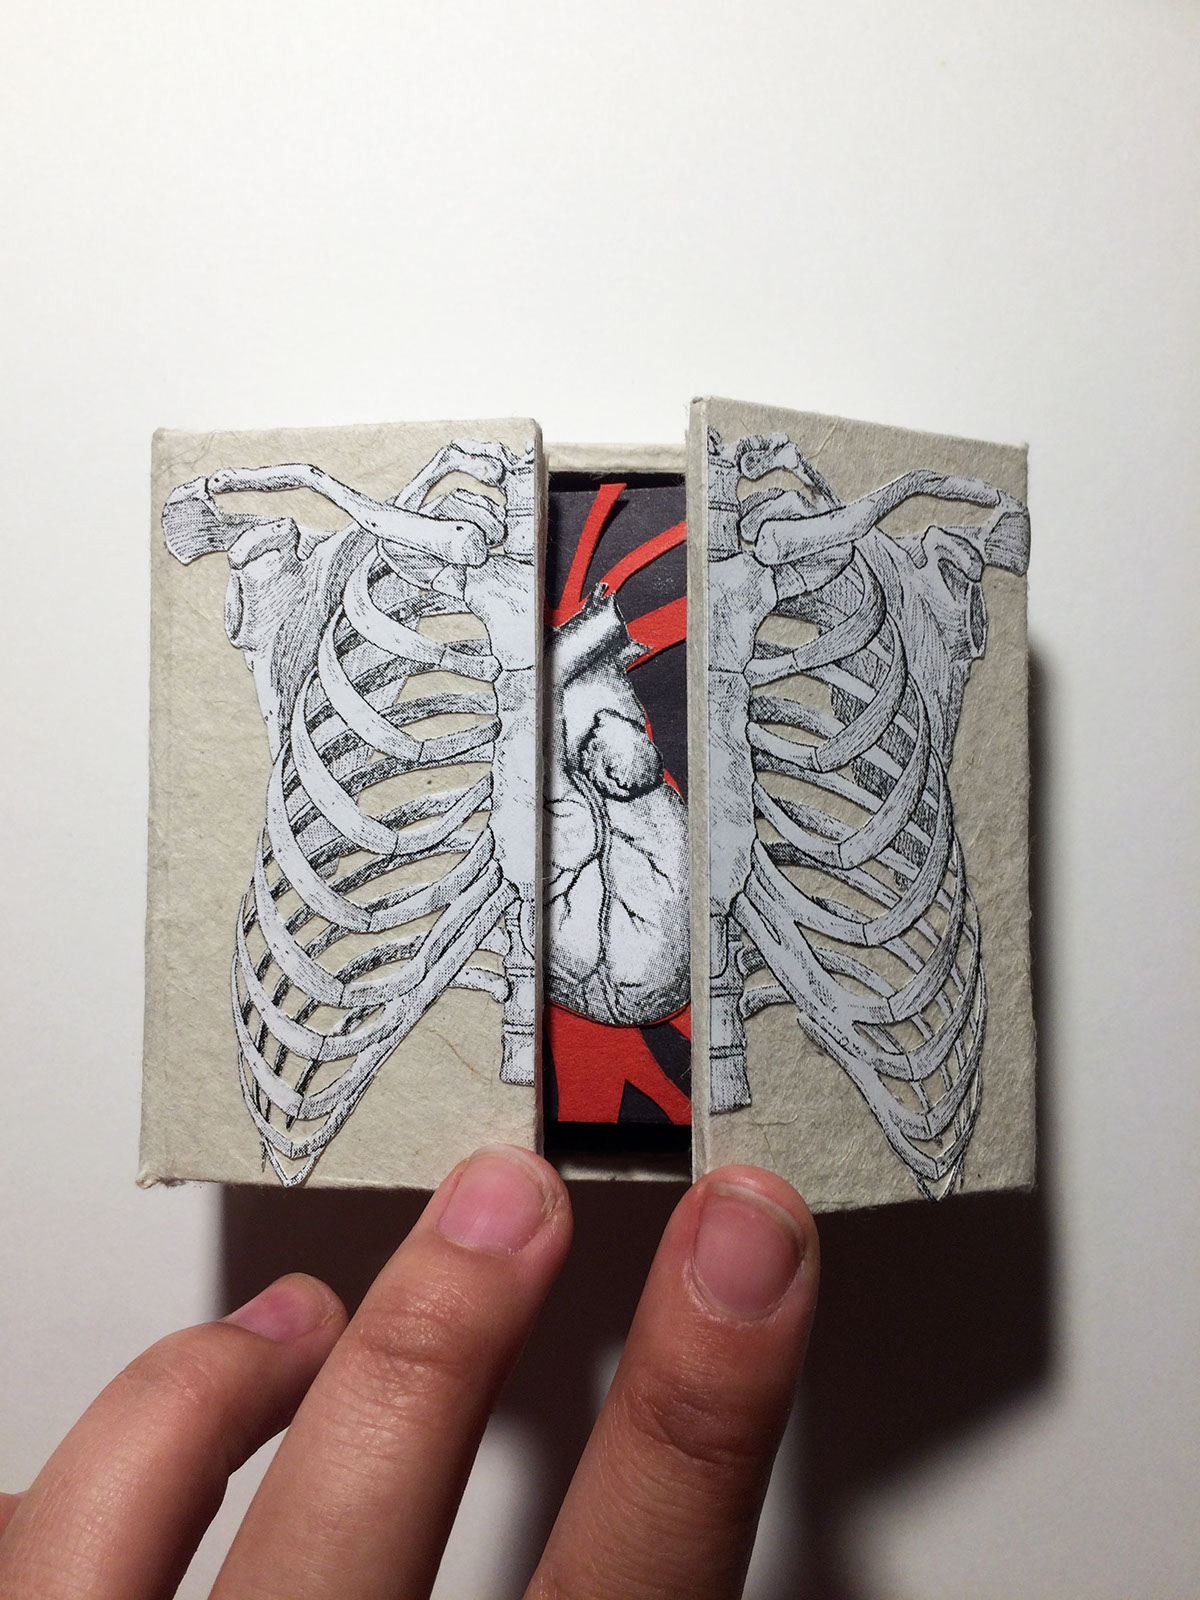 annalisa sheldahl fall 2015 artist book Flitter book heart rib cage